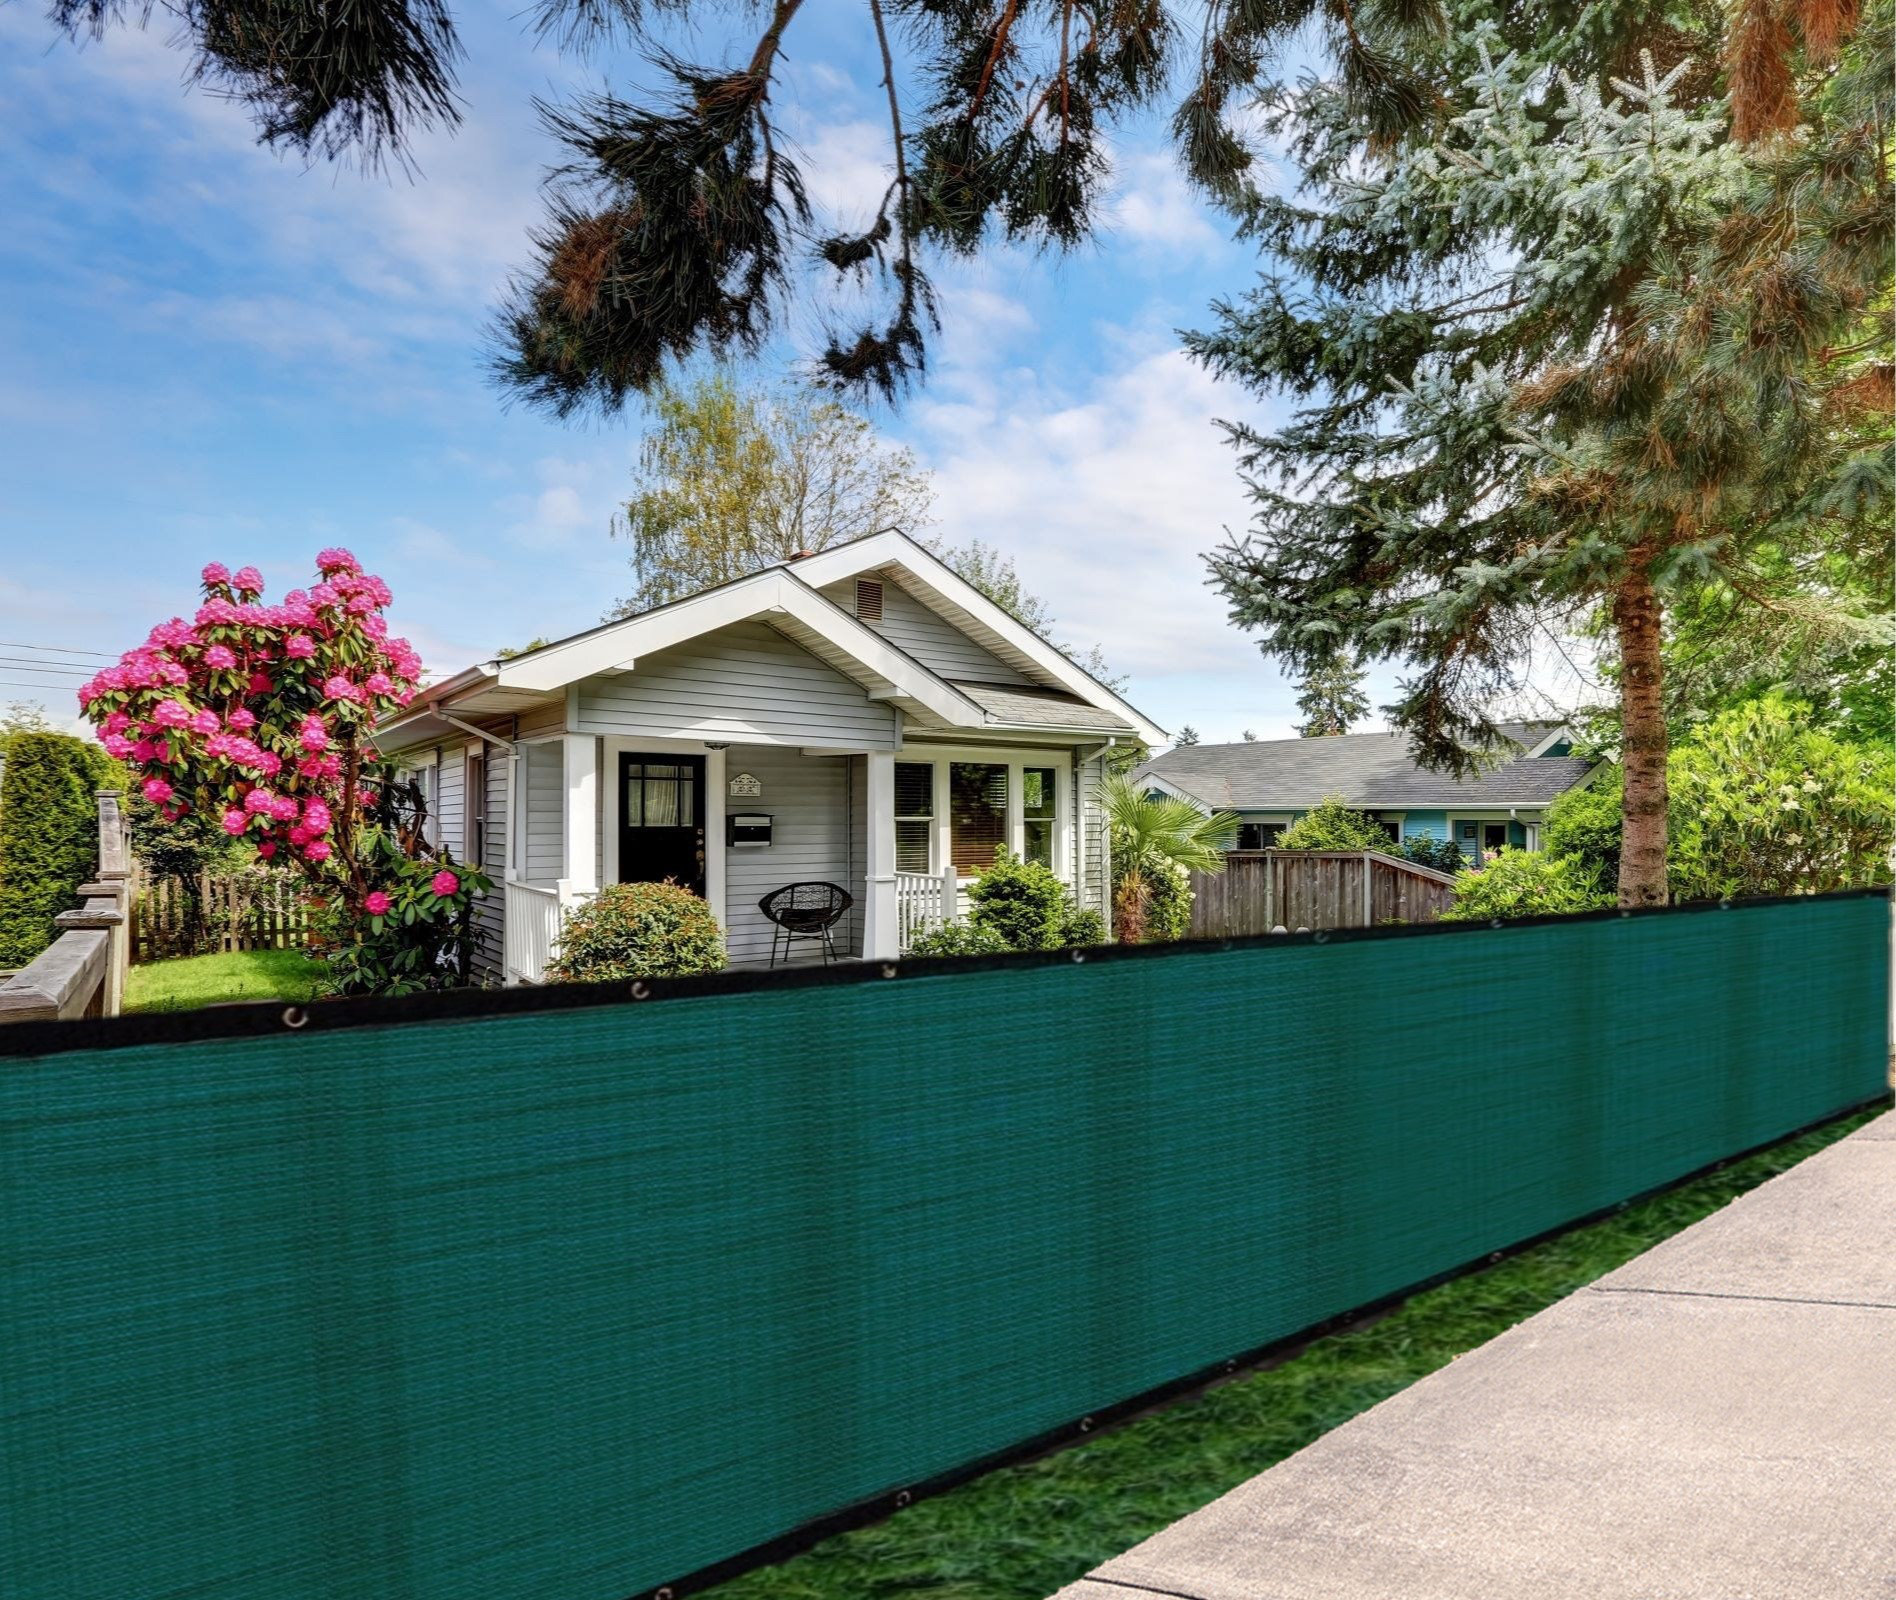 BalajeesUSA 6ft x 50ft Green privacy fence screen - Wayfair Canada